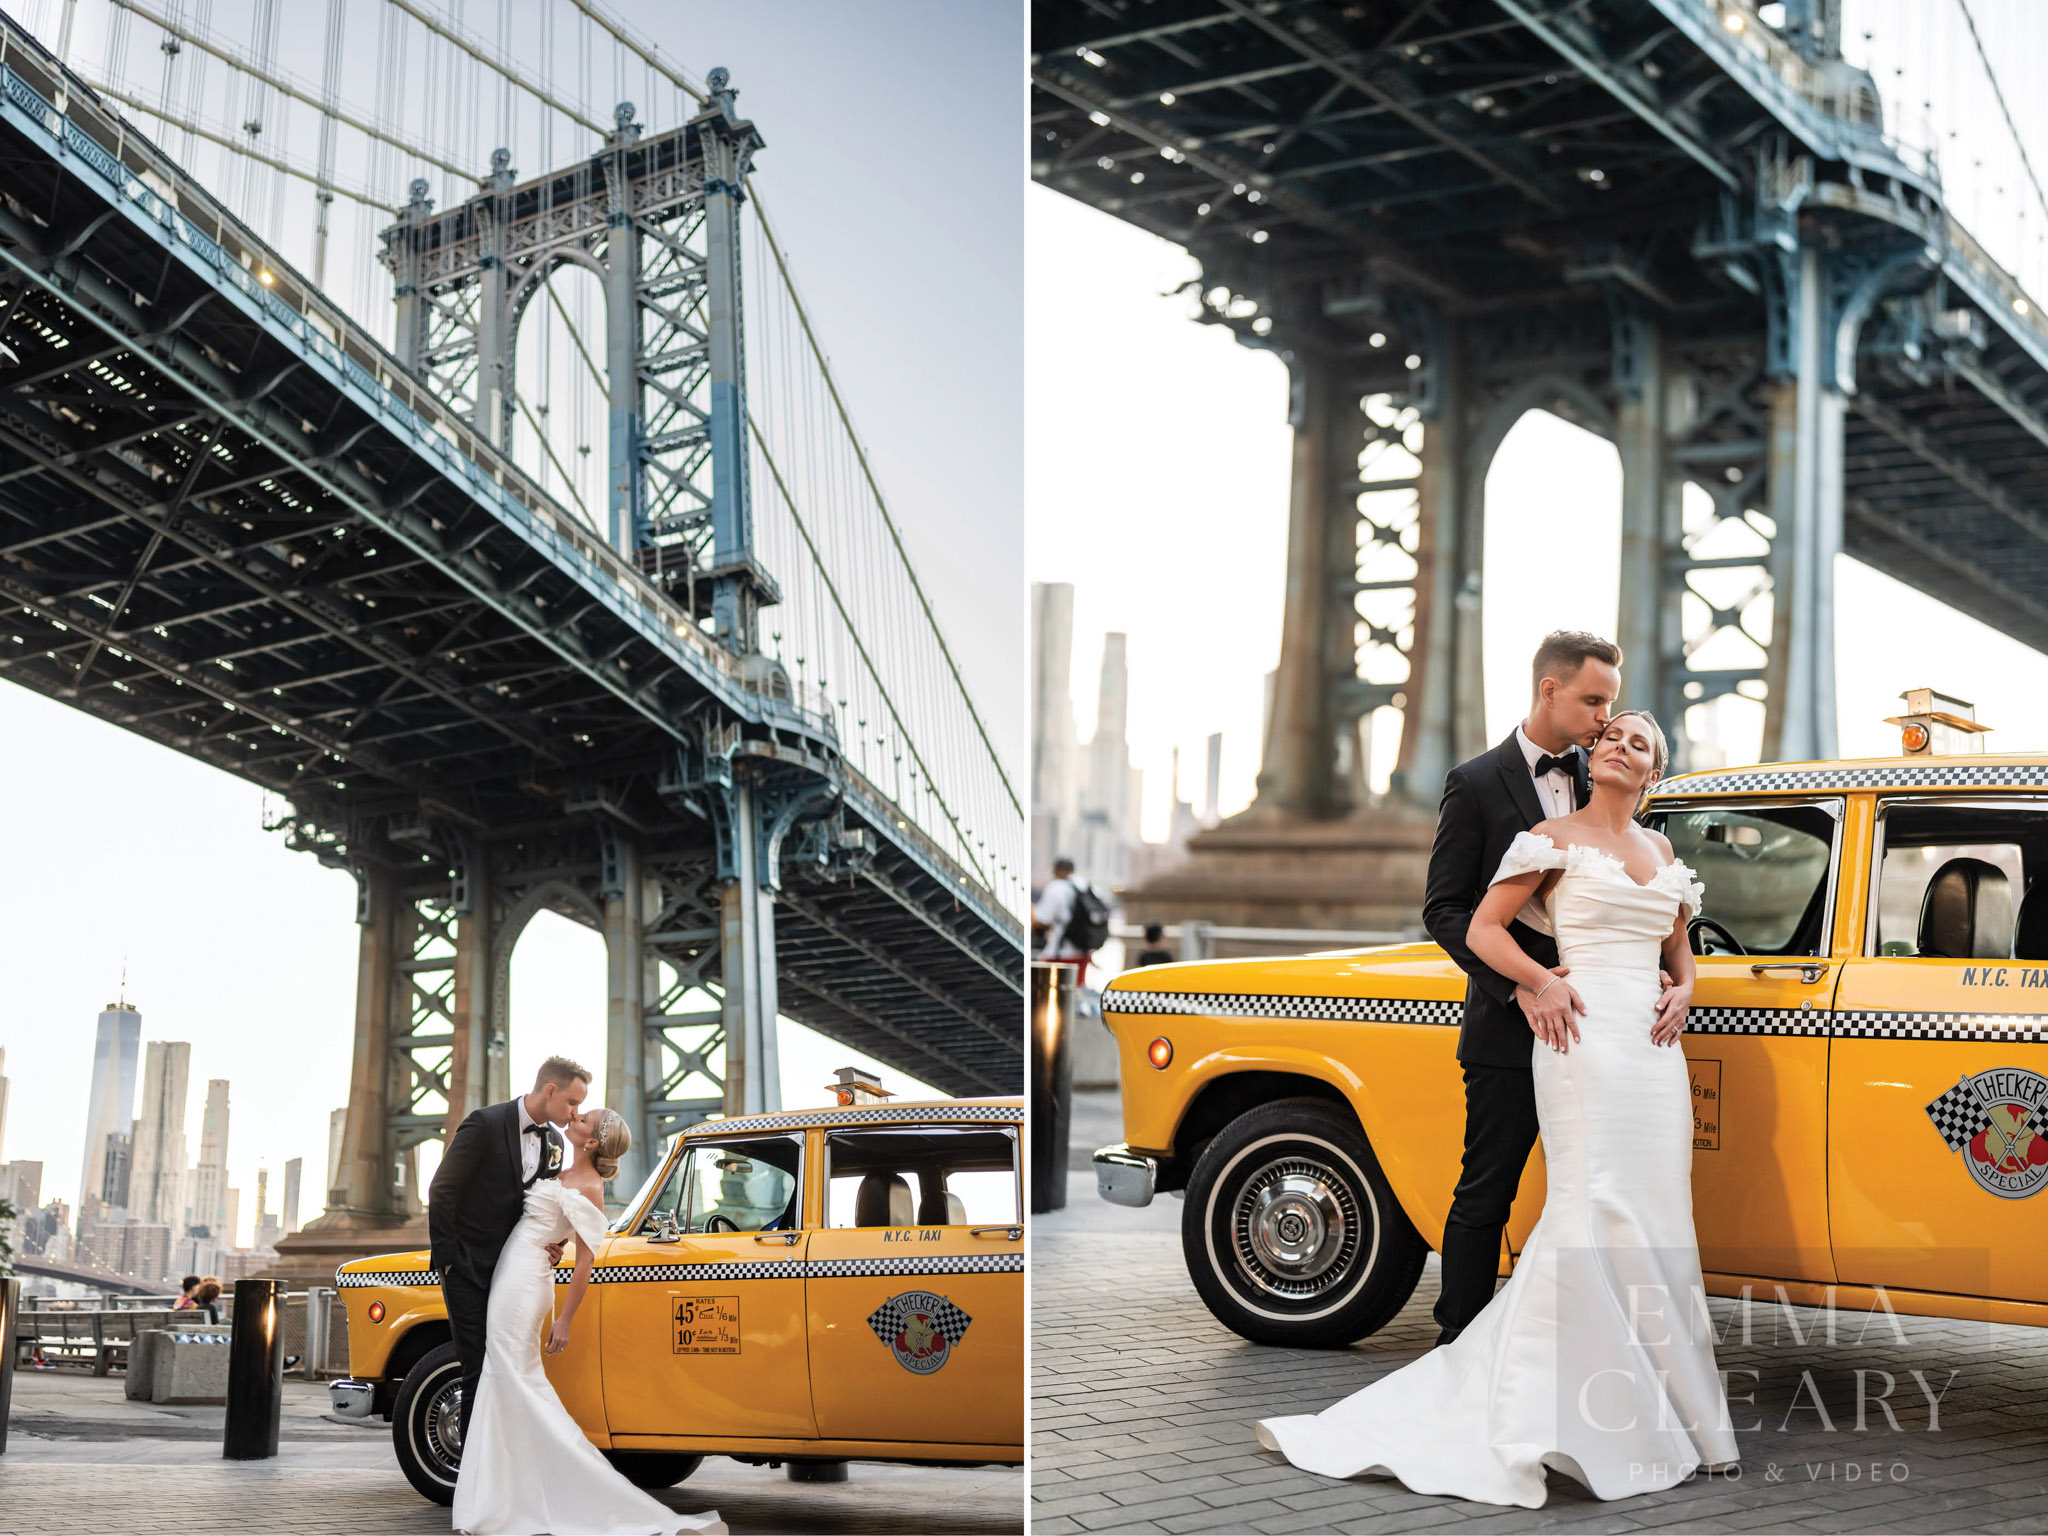 Wedding portrait on the background of the bridge